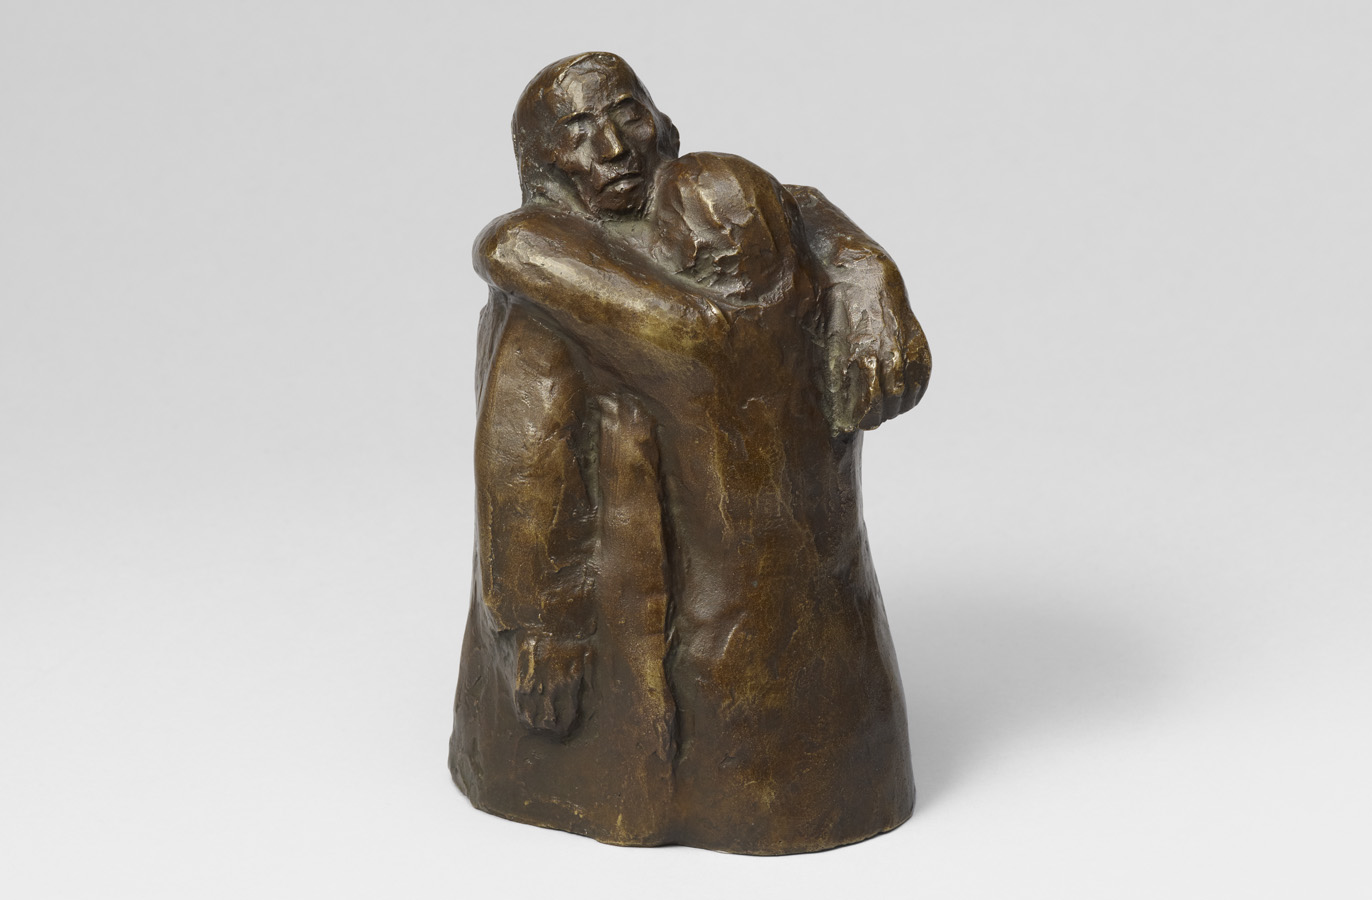 Käthe Kollwitz, Adieu, 1940/41, bronze, Seeler 39, collection Kollwitz de Cologne © Käthe Kollwitz Museum Köln